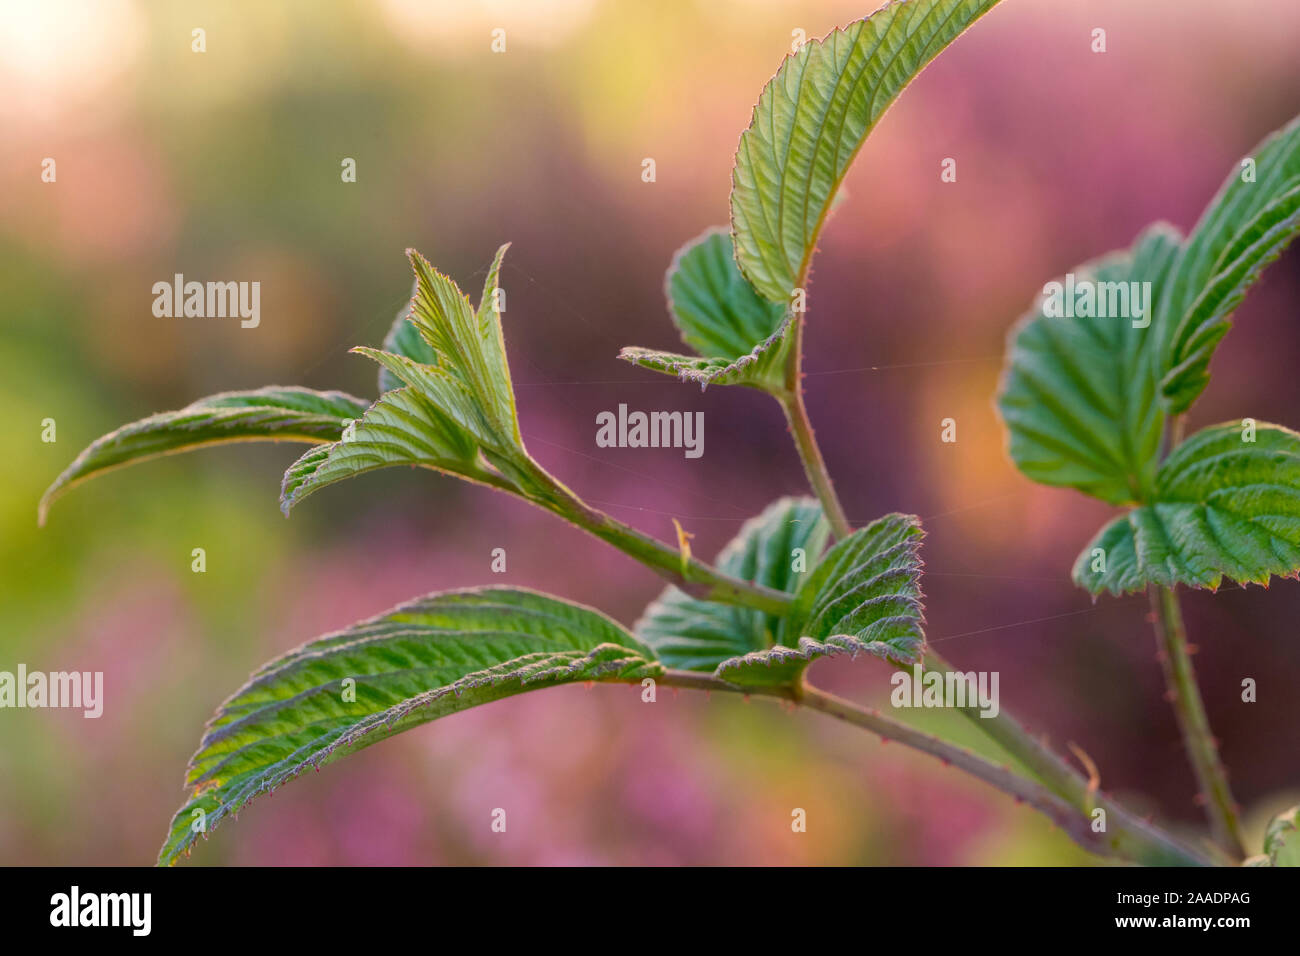 Himbeere, Rubus idaeus, Ordnung Doldenblütlerartige (Apiales), Familie Doldenblütler (Apiaceae), Unterfamilie Saniculoideae Foto Stock